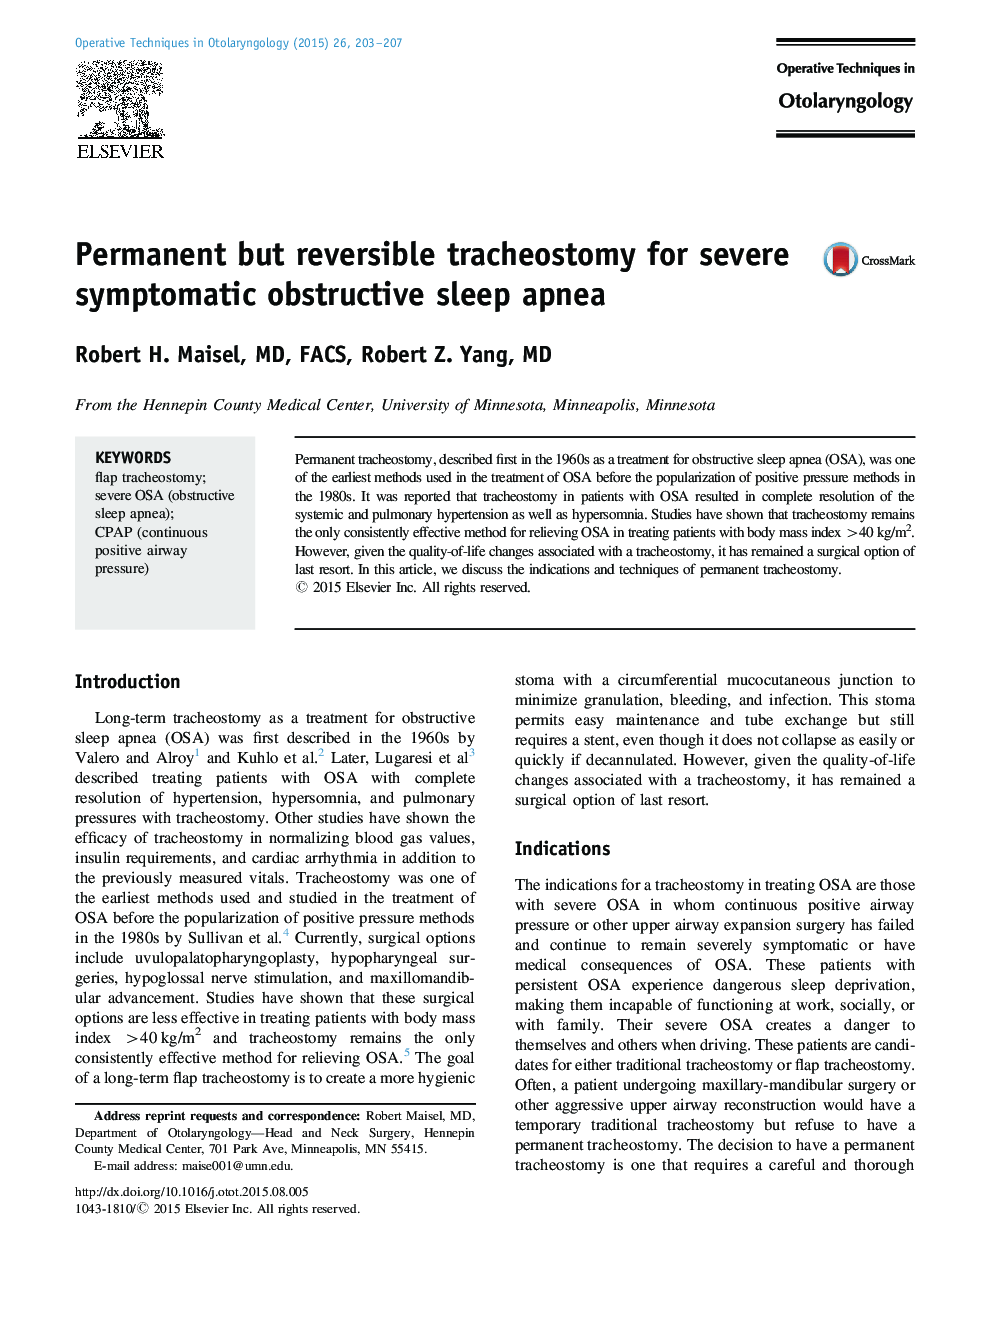 Permanent but reversible tracheostomy for severe symptomatic obstructive sleep apnea